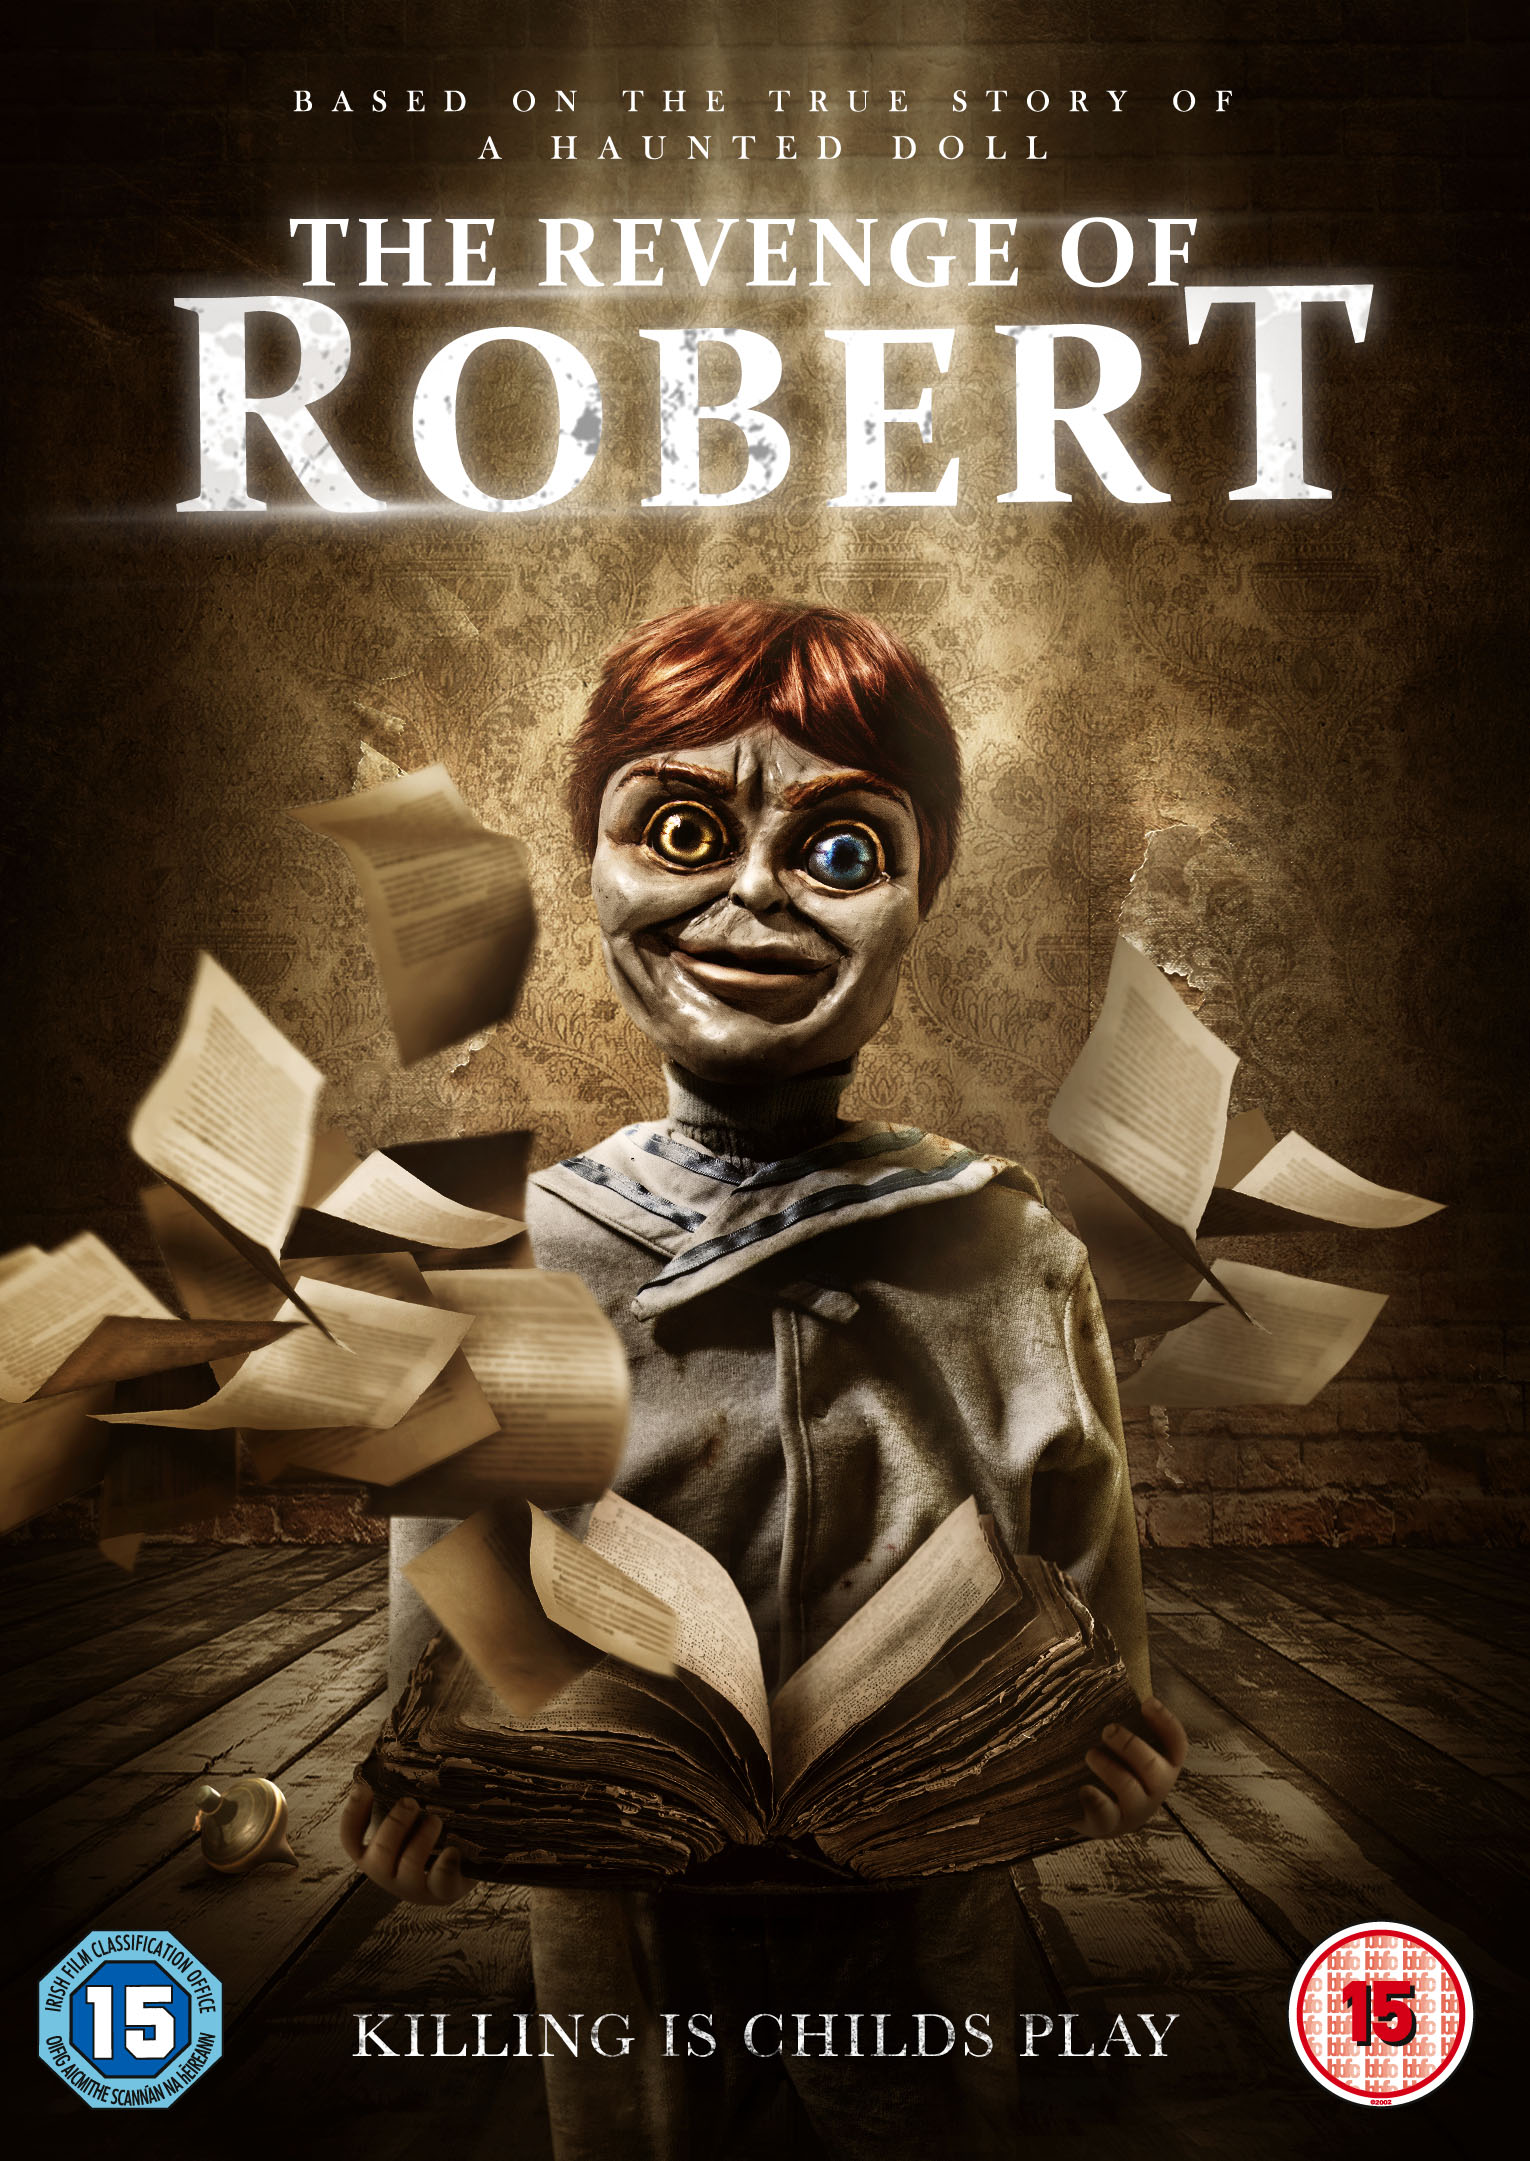 Nonton film The Revenge of Robert the Doll layarkaca21 indoxx1 ganool online streaming terbaru